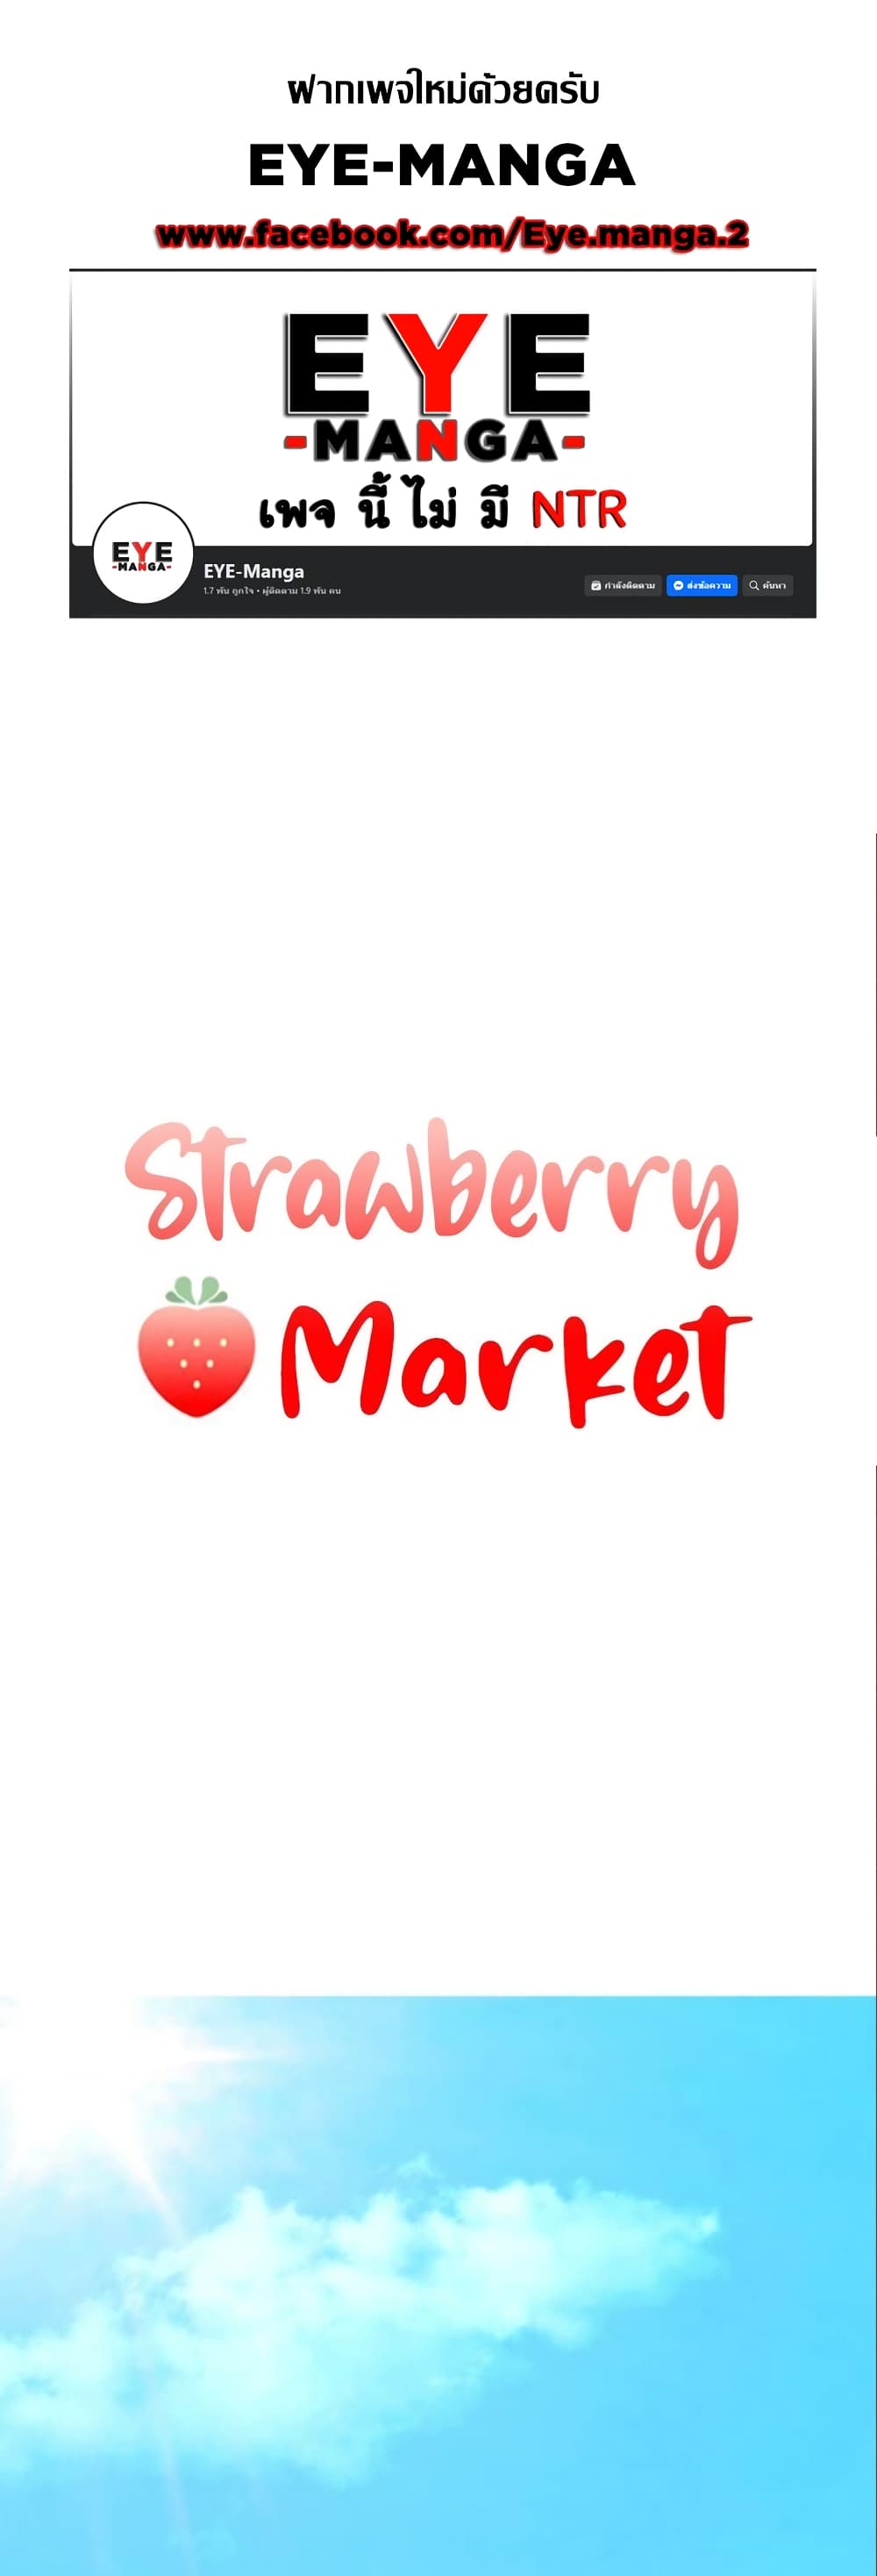 Strawberry Market 1-1